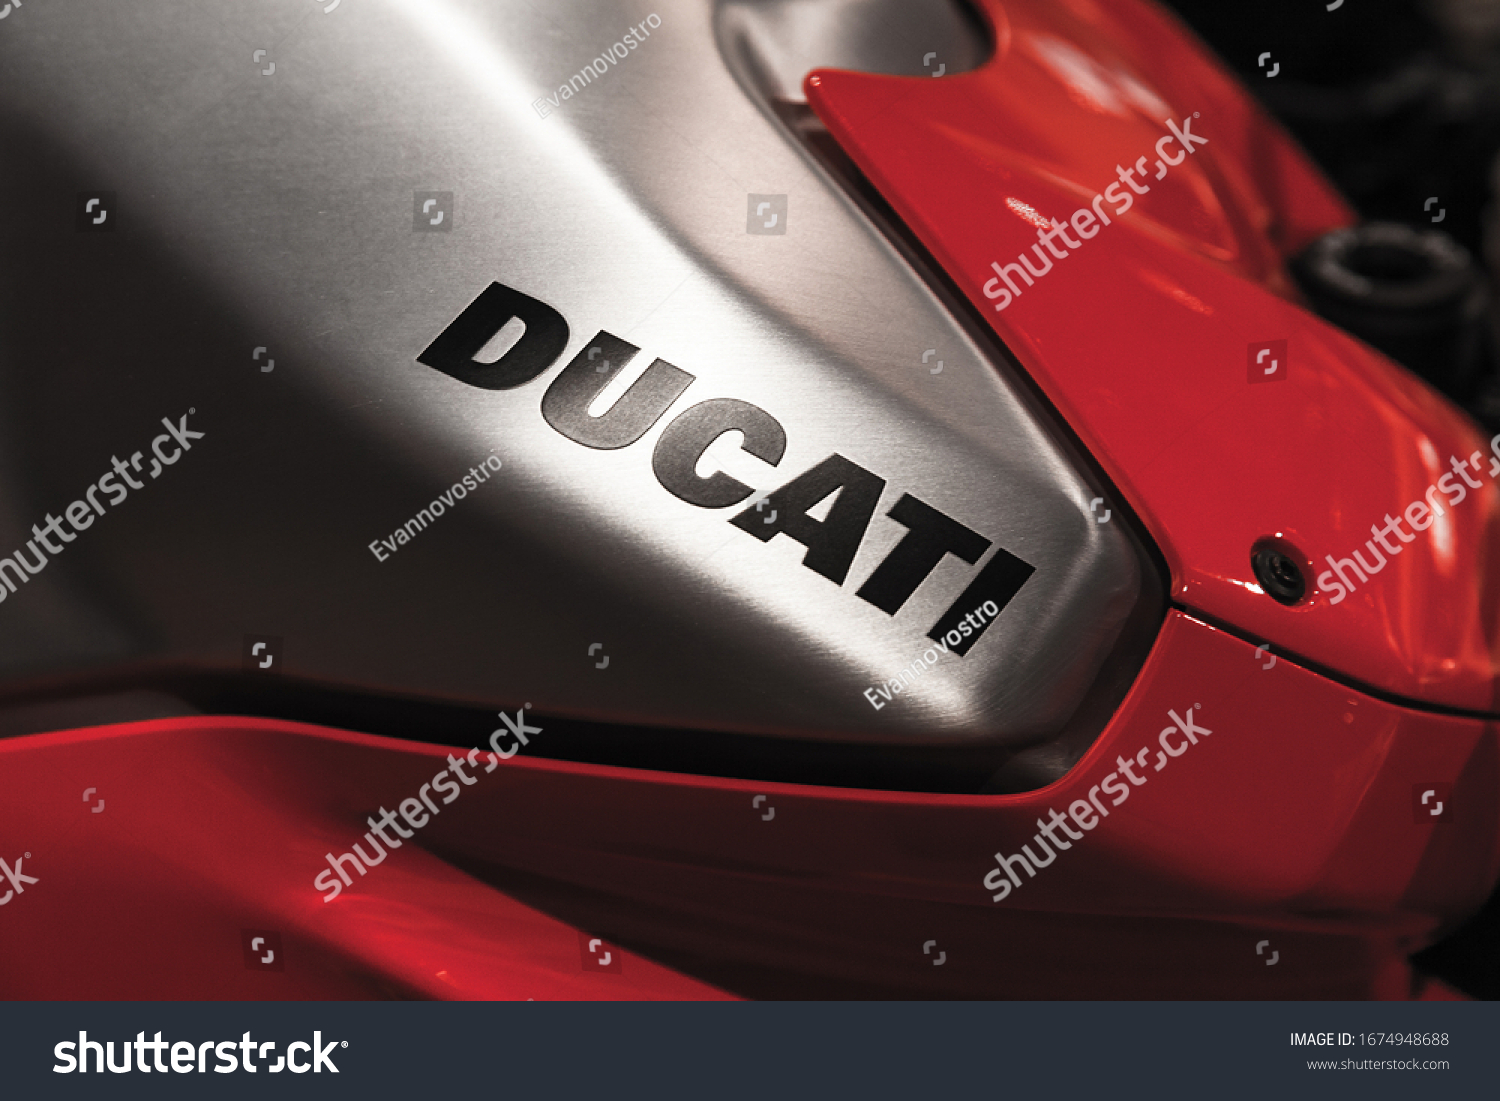 Ducati Bike Images Stock Photos Vectors Shutterstock